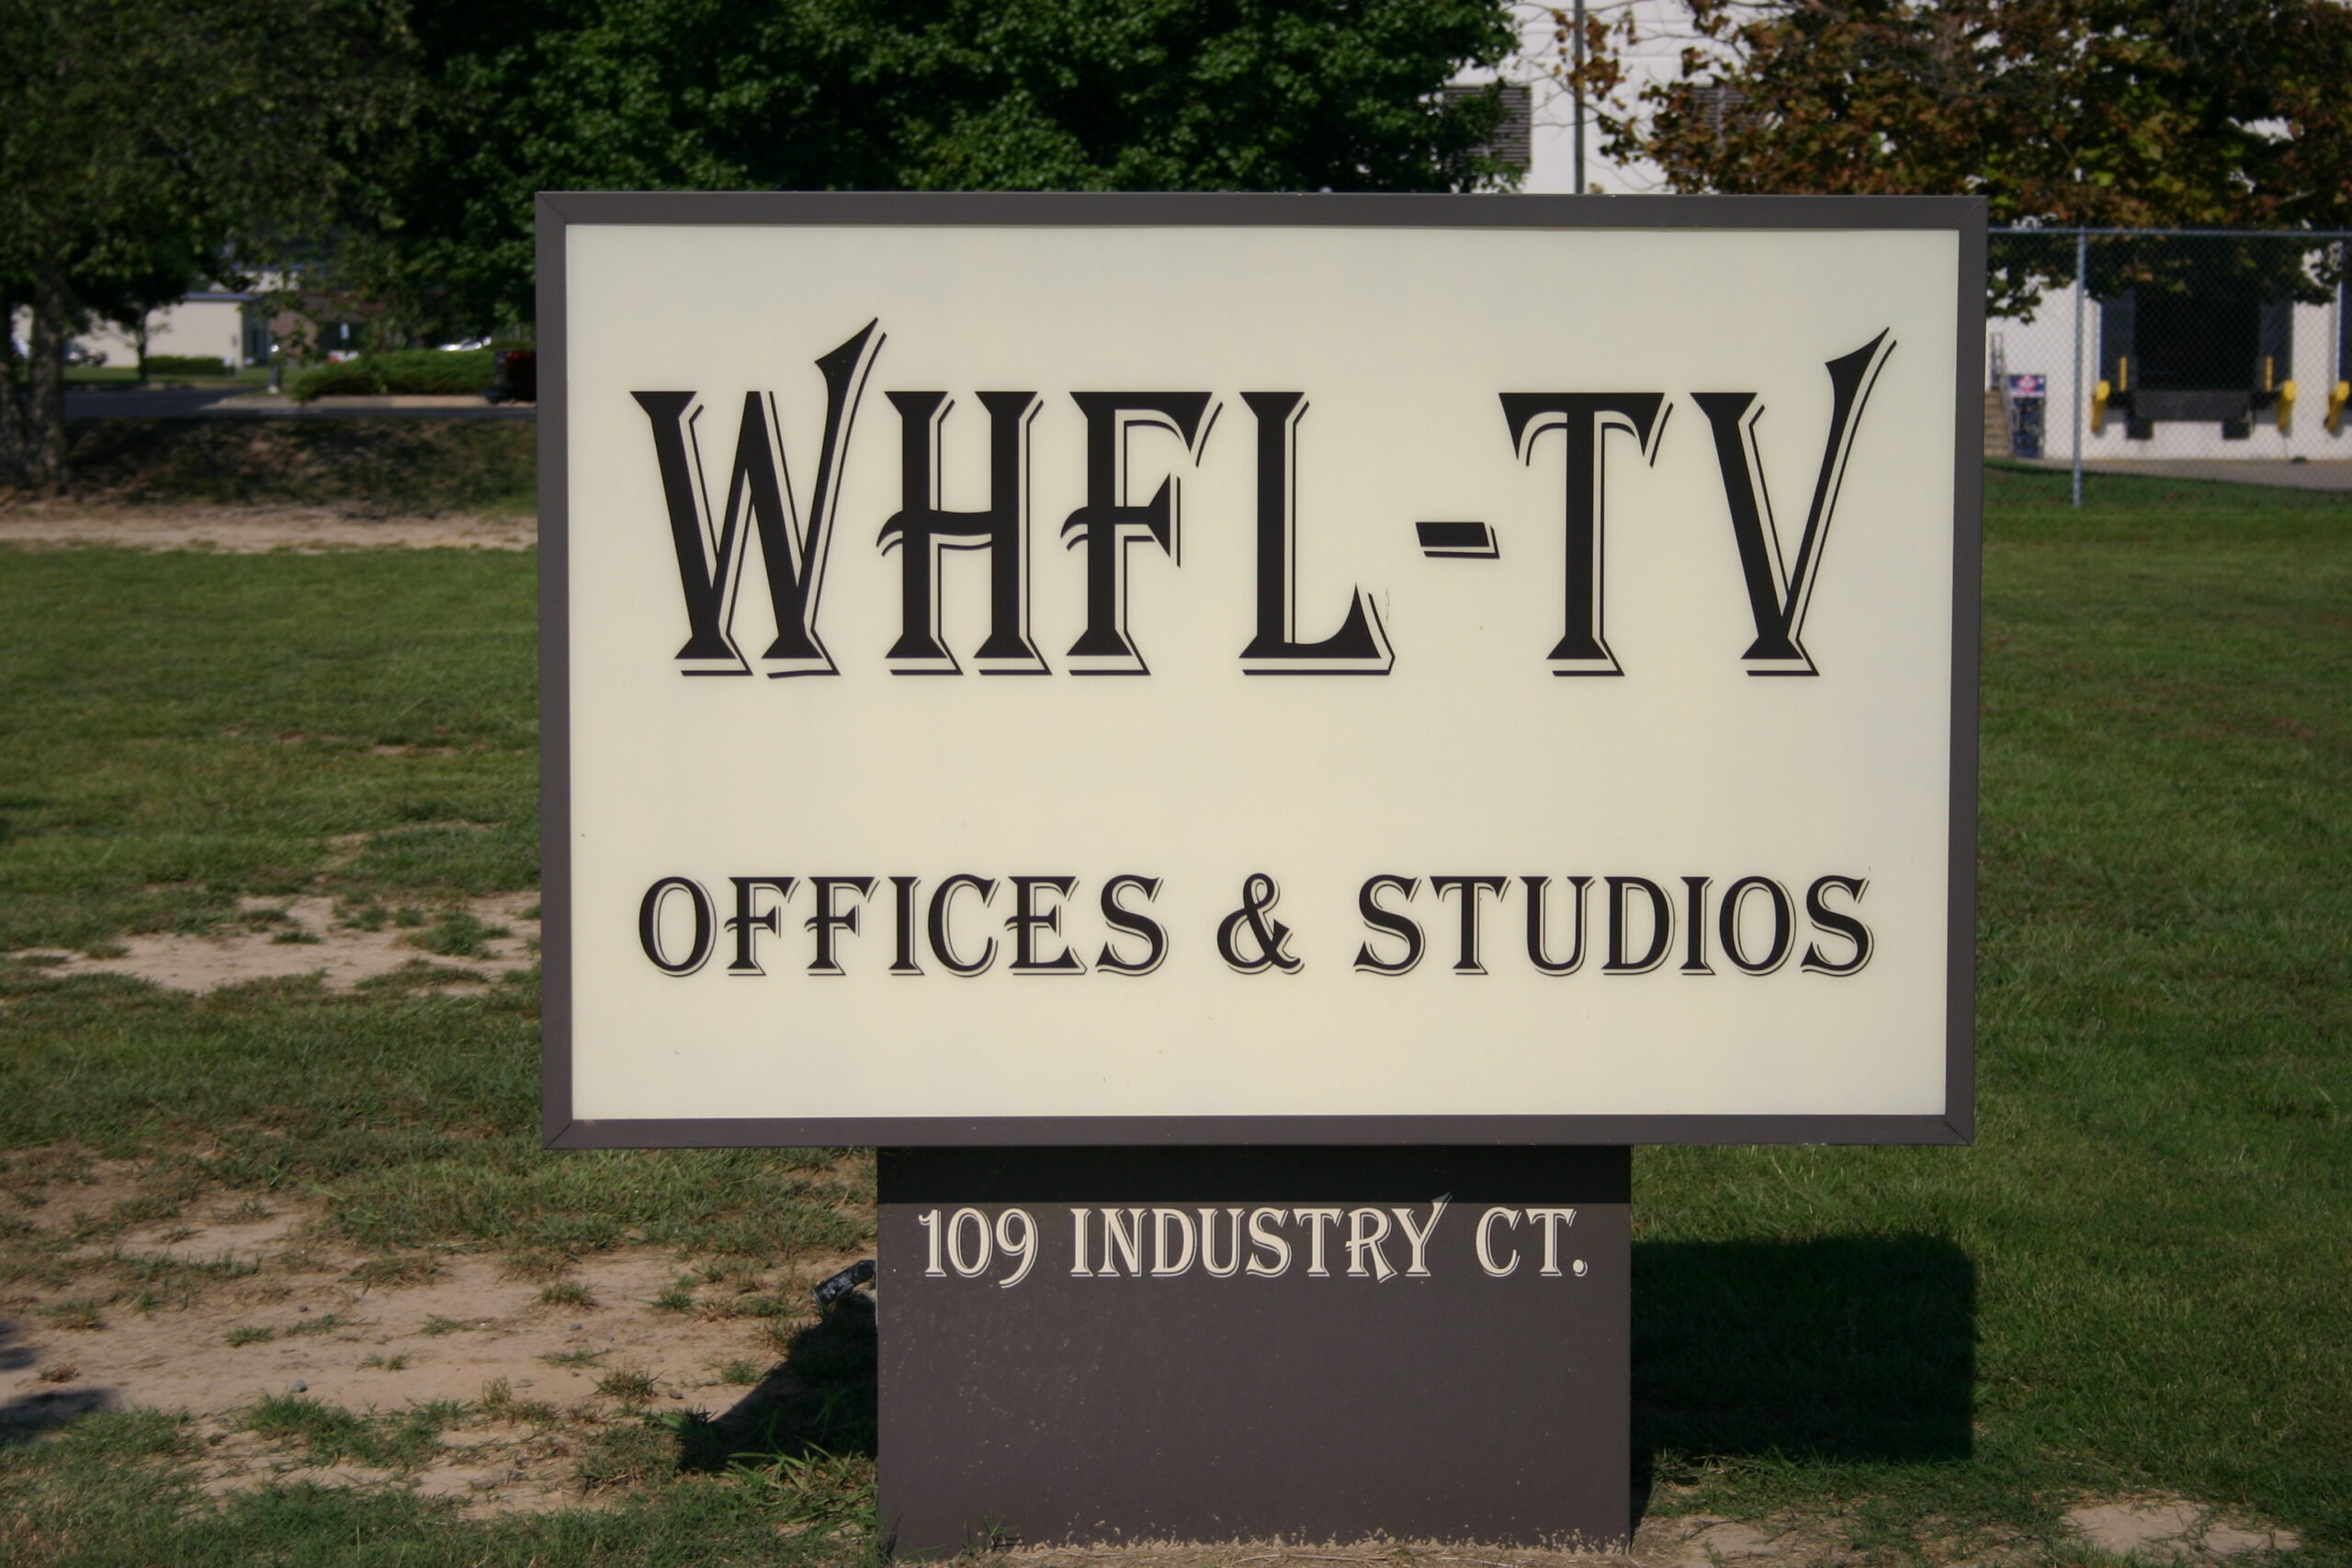 whfl-tv_sign